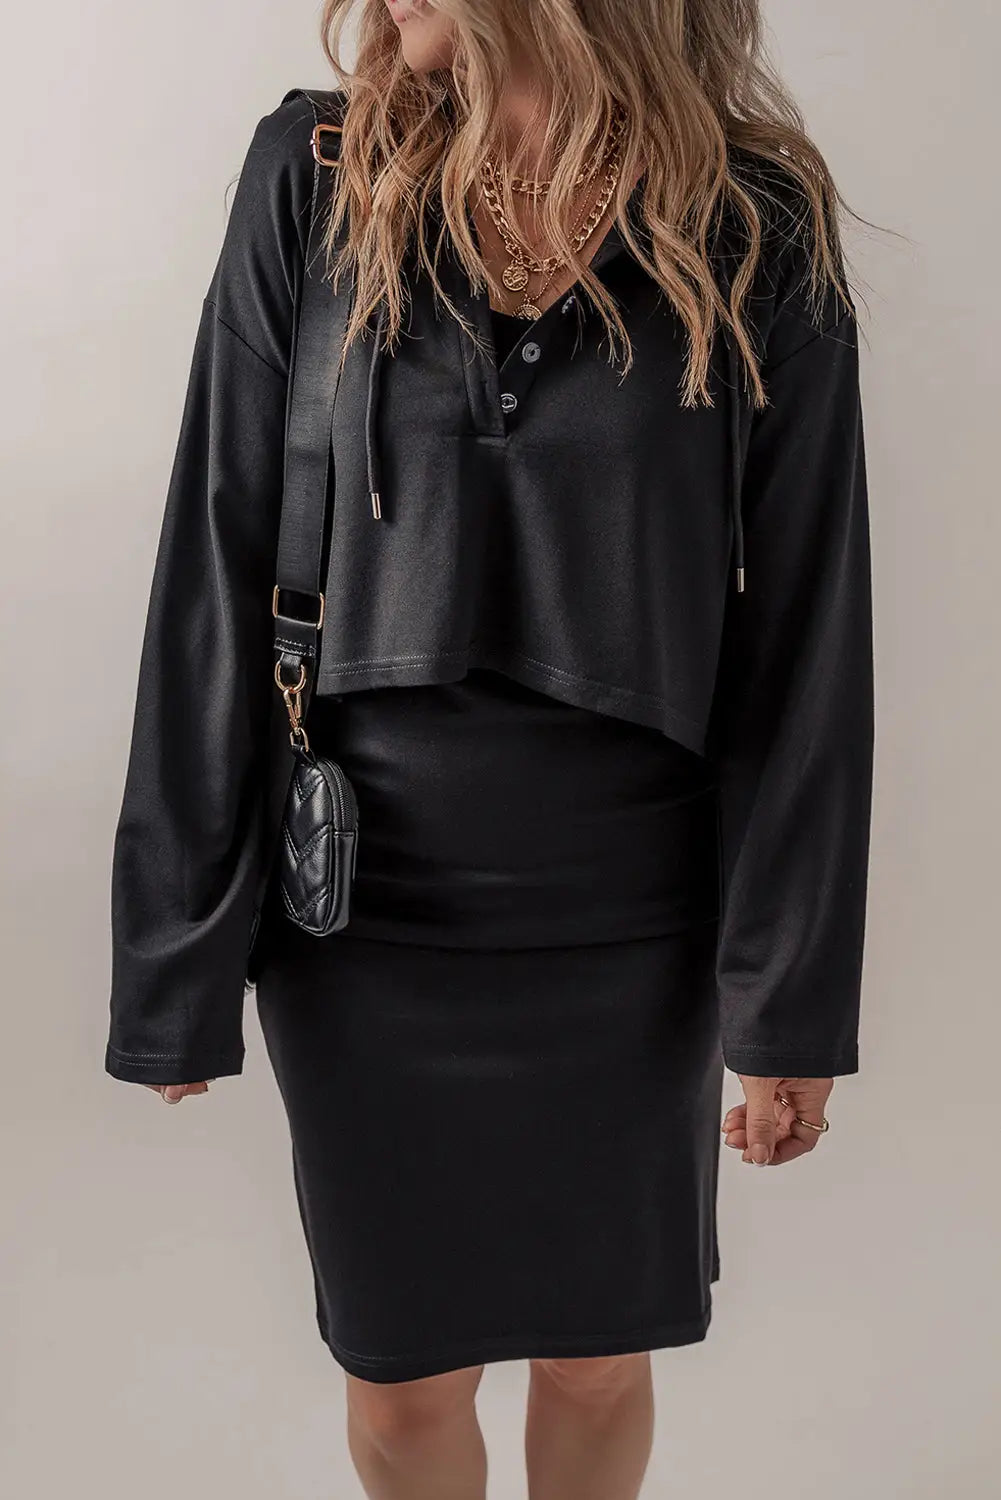 Black cropped hoodie slip dress 2pcs outfit - s / 95% cotton + 5% elastane - loungewear